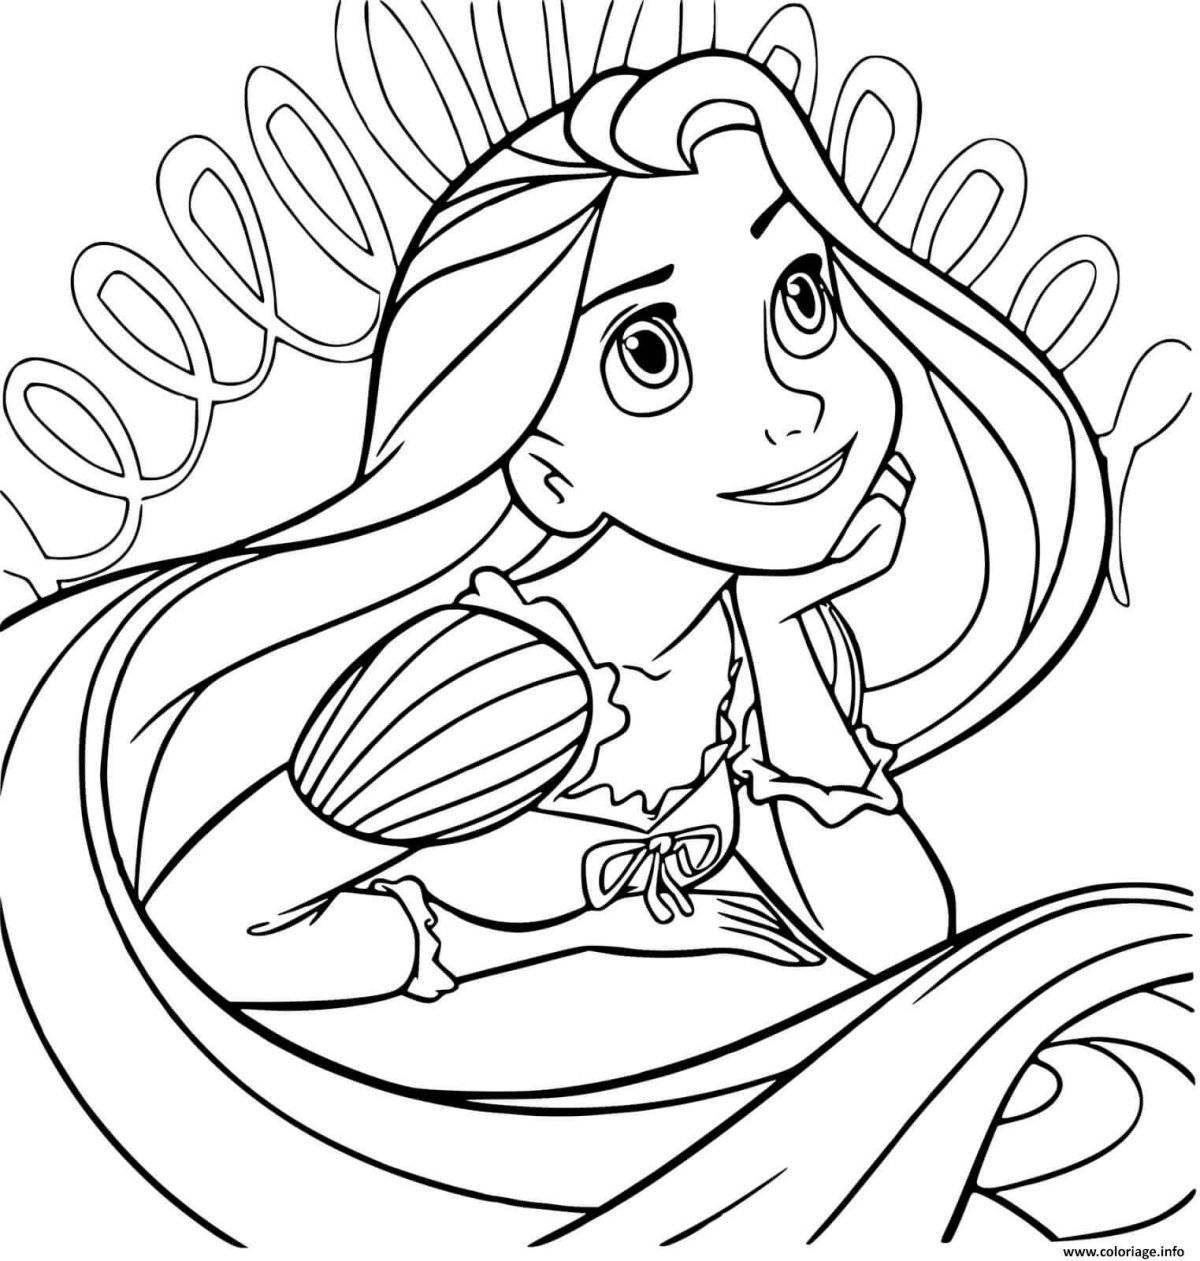 Princess rapunzel glitter coloring book for kids